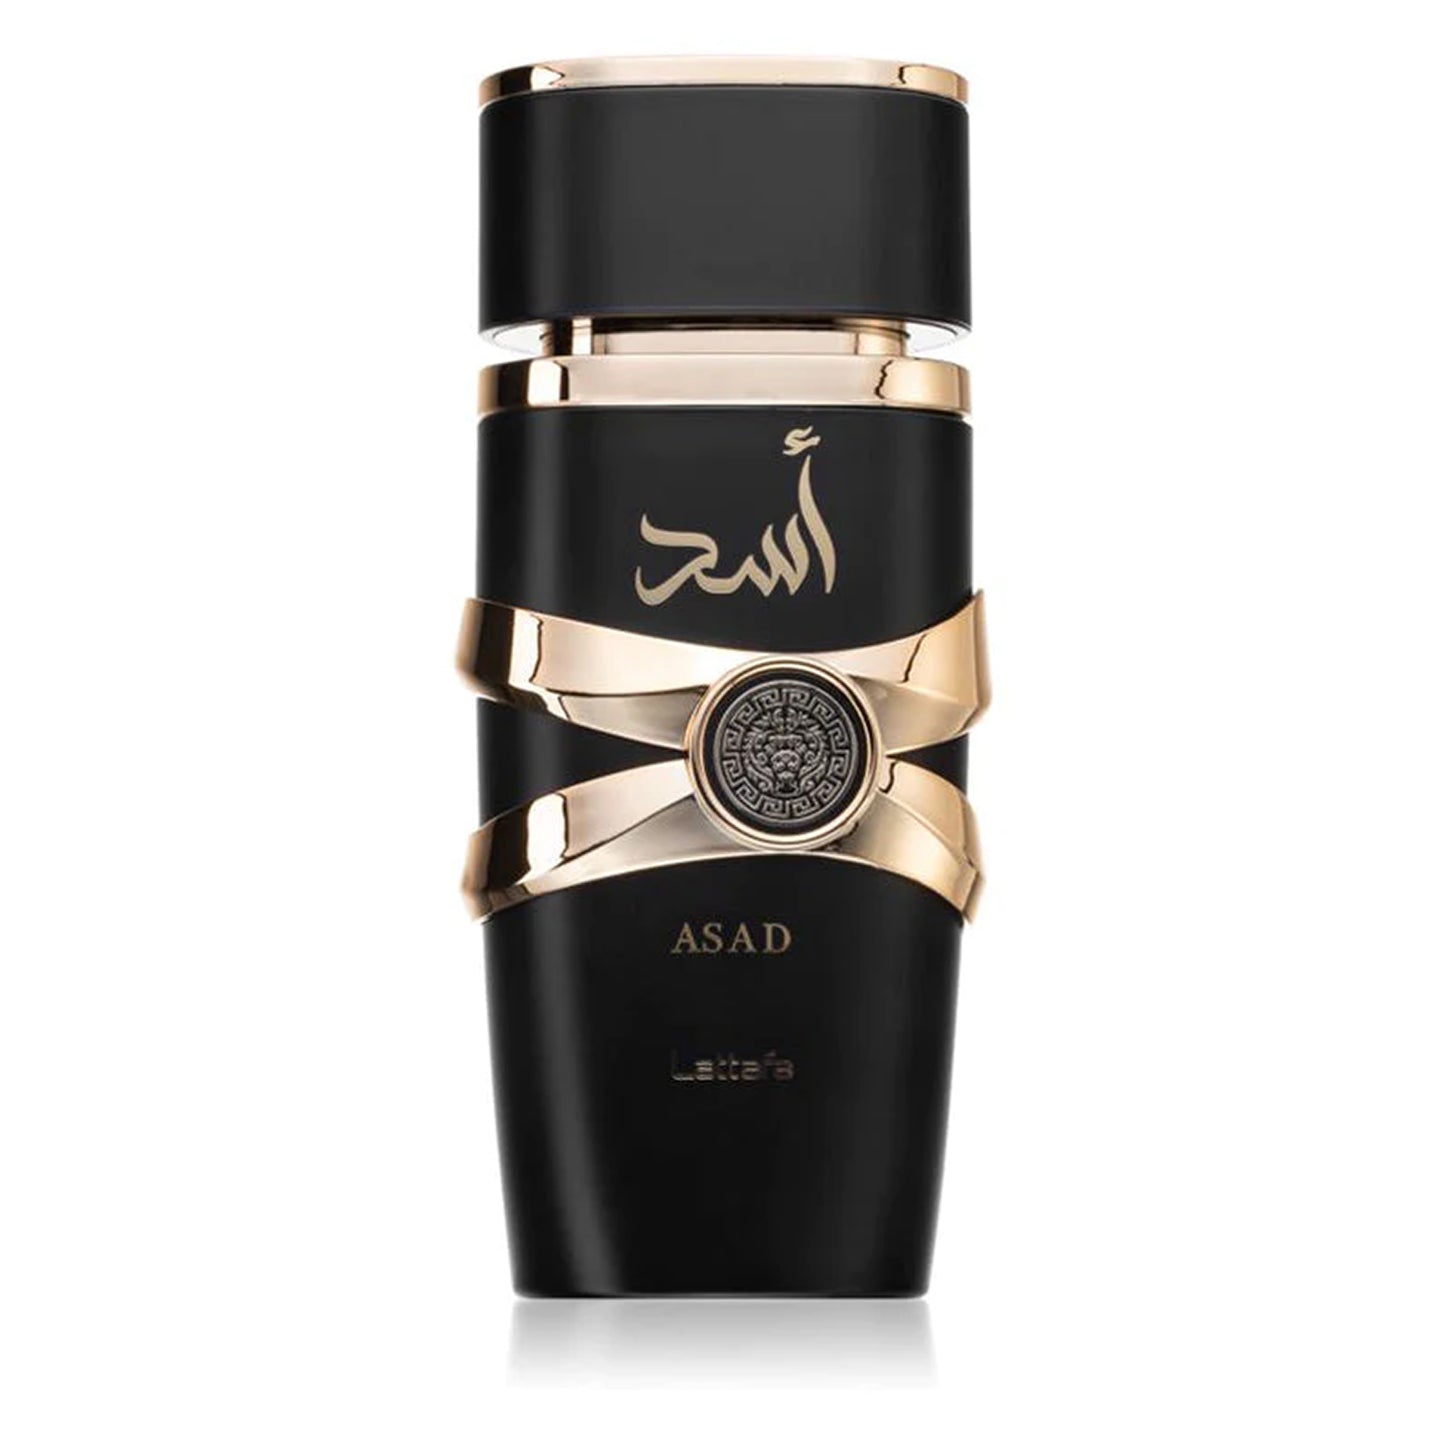 Asad Perfume - Eau De Parfum 100ml For Men - Long Lasting Inspired Luxury Fragrance